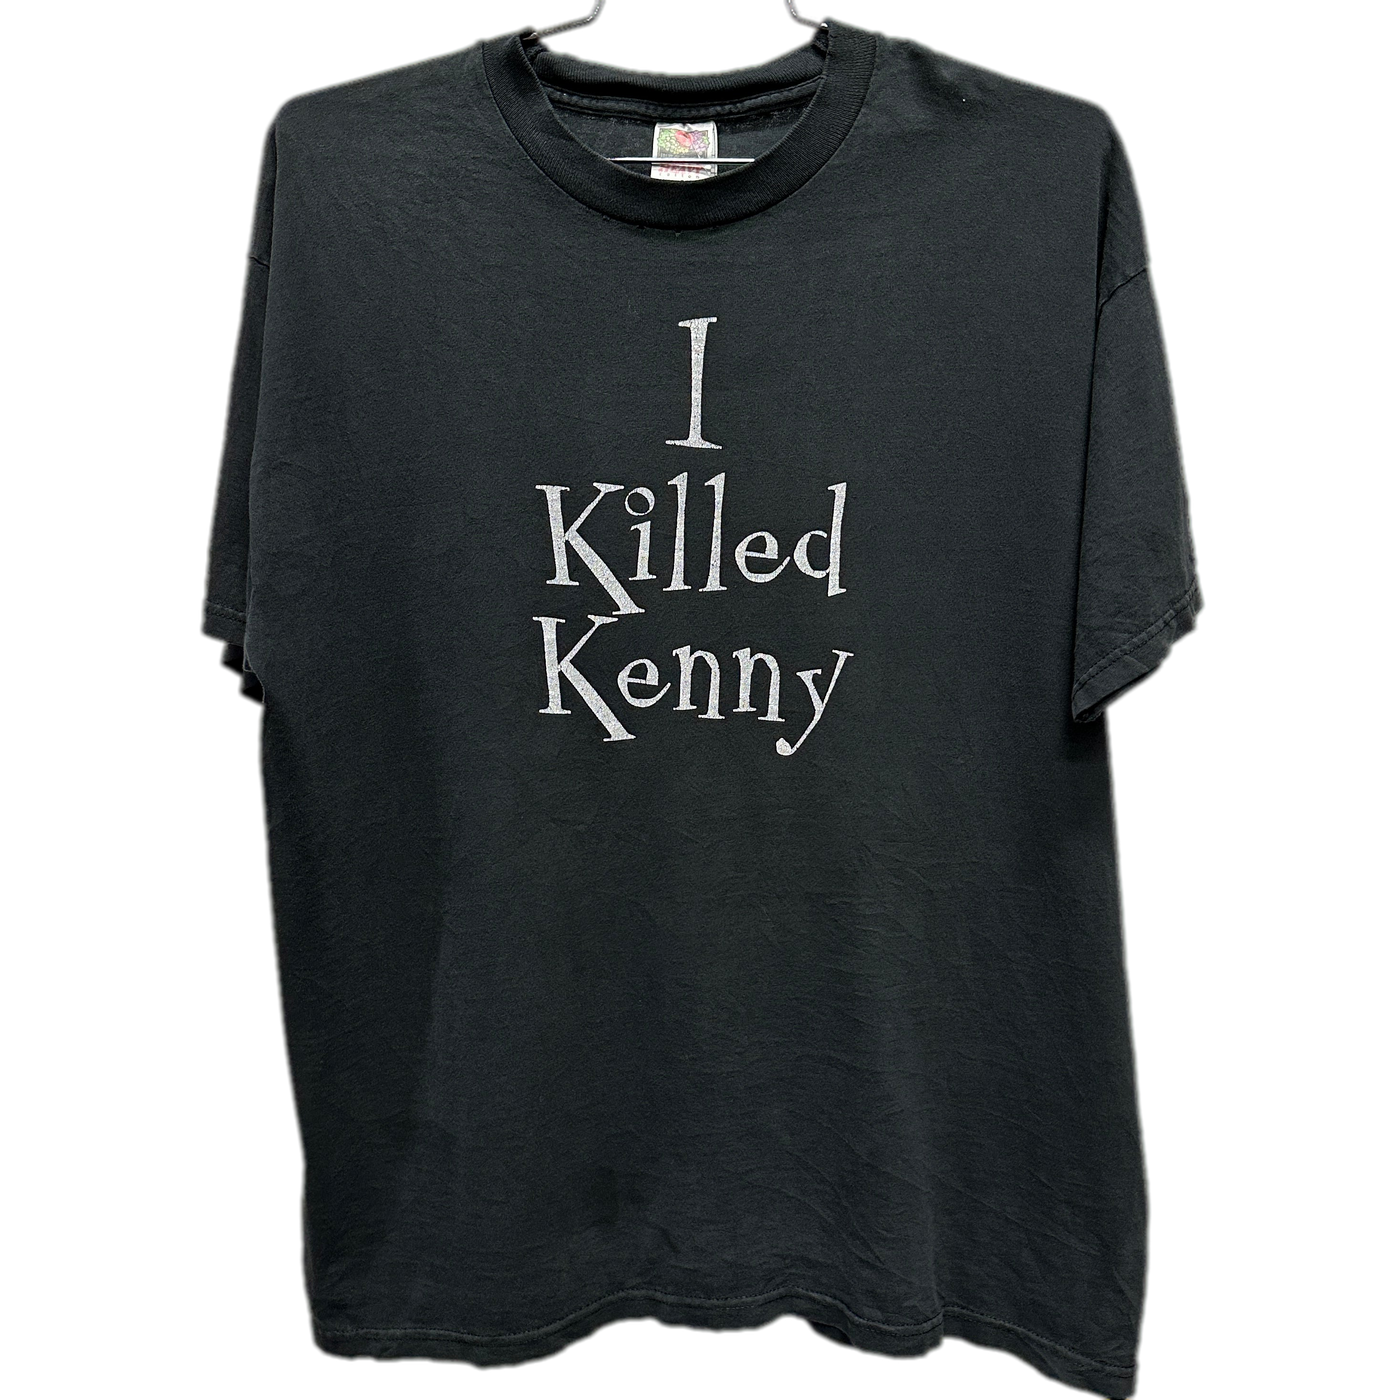 00's South Park "I Killed Kenny" Black Cartoon T-shirt sz XL